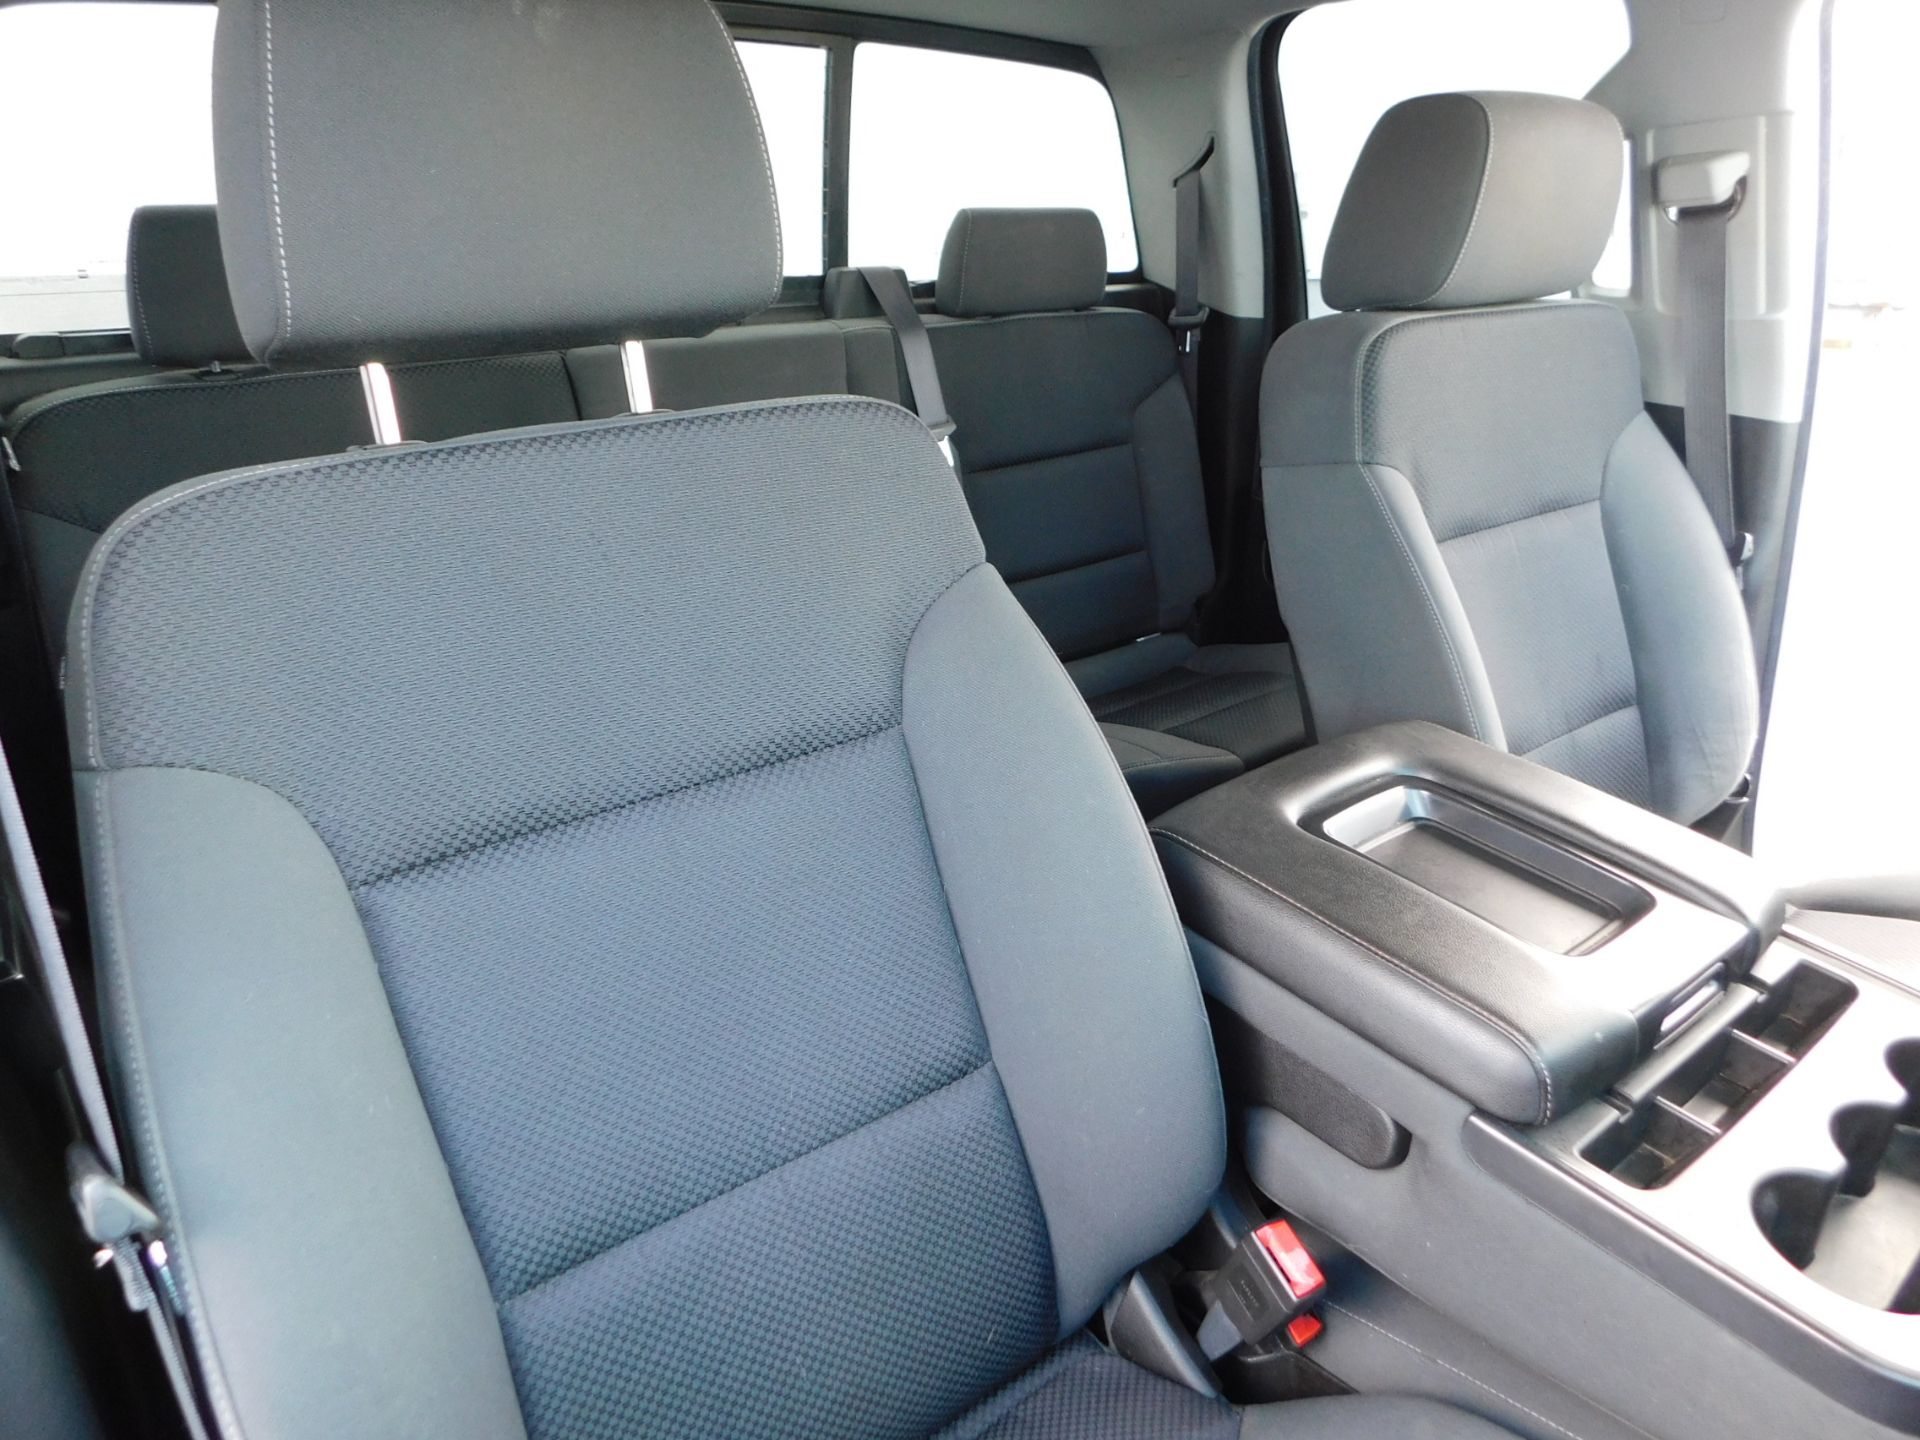 2014 Chevrolet Silverado LT Pickup, VIN 1GCVKREC3EZ139405, 4-Door 4 WD, Automatic, AM/FM, AC, Cruise - Image 44 of 51